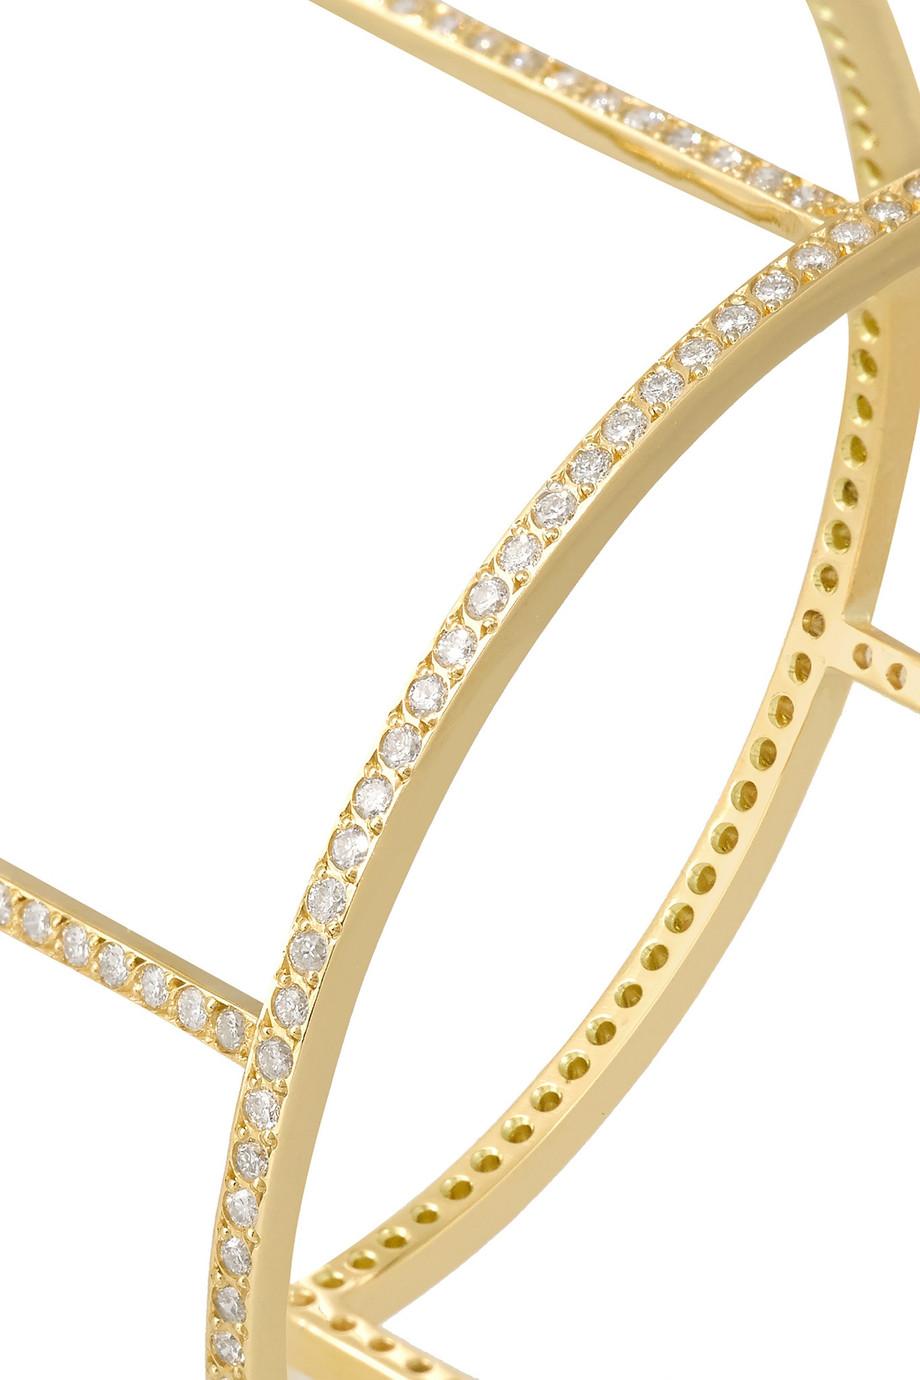 Ileana Makri 18 Karat Yellow Gold Pavé White Diamond Wire Cuff In New Condition For Sale In Athens, GR